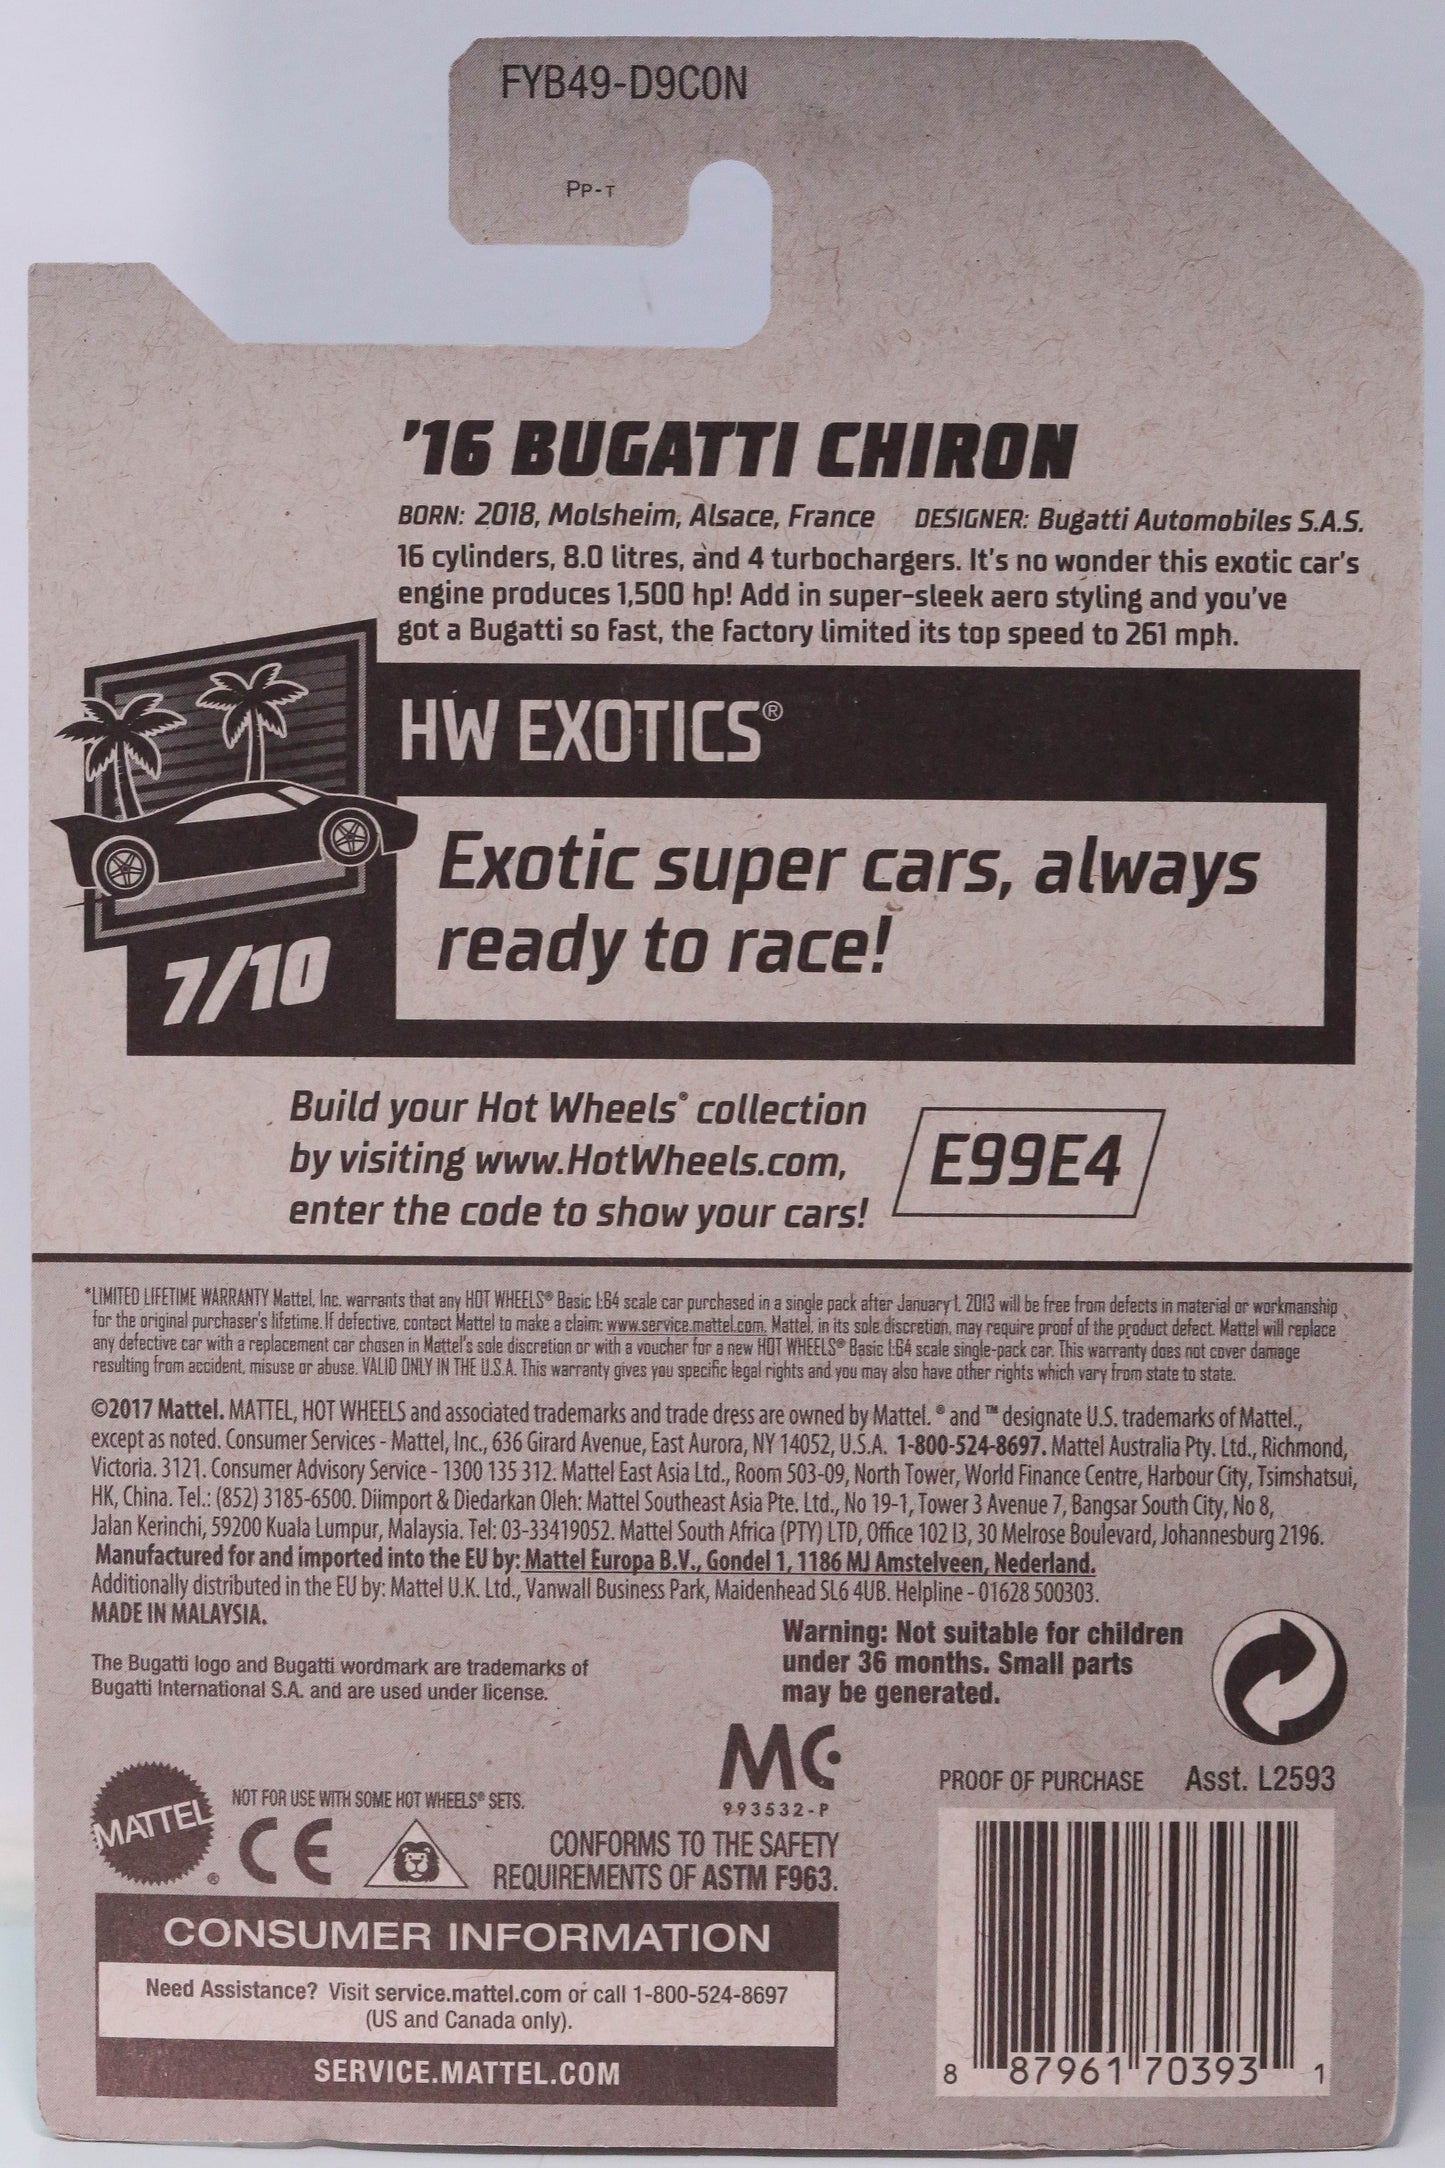 Hot Wheels '16 Bugatti Chiron HW Exotics FYB49